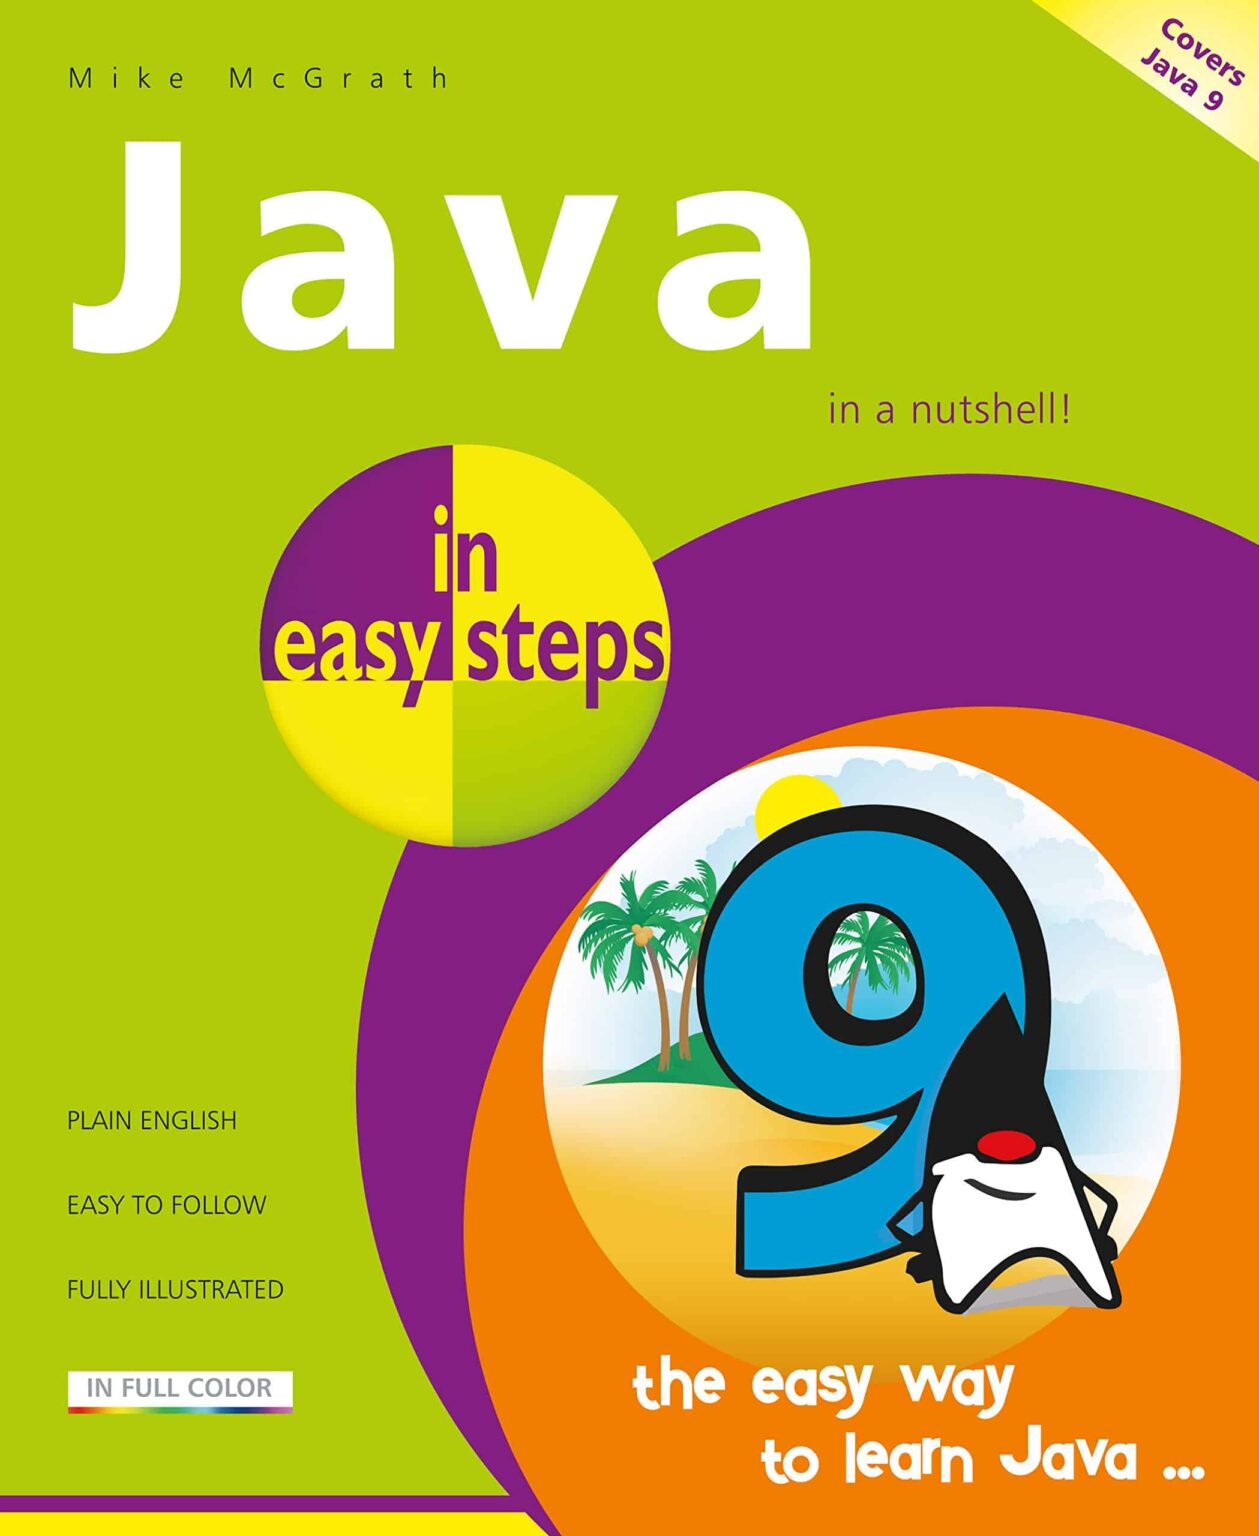 best book to learn java intermediate